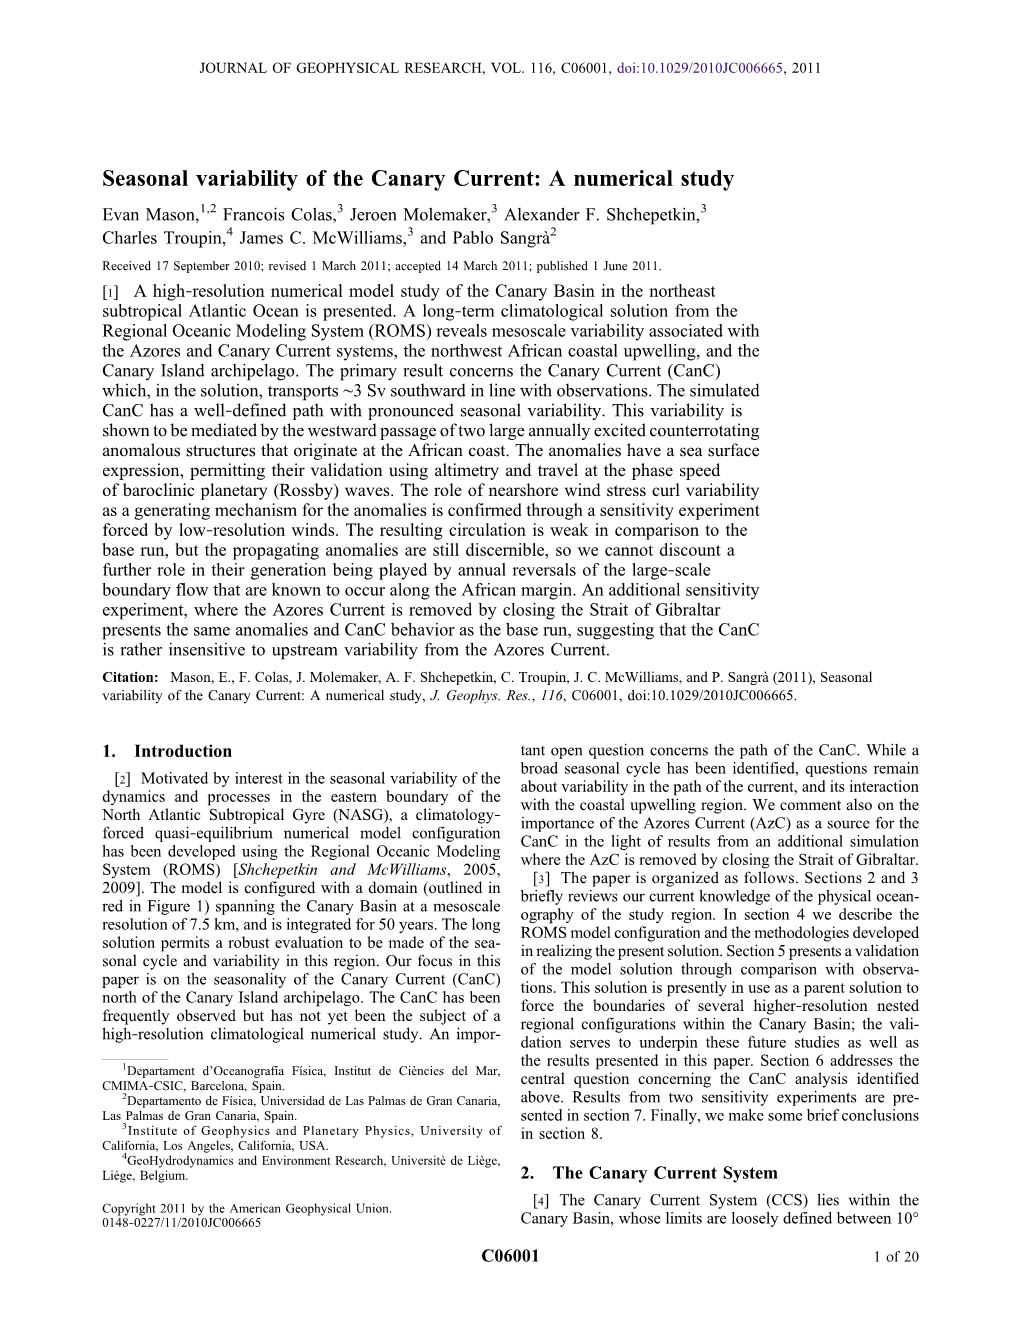 Seasonal Variability of the Canary Current: a Numerical Study Evan Mason,1,2 Francois Colas,3 Jeroen Molemaker,3 Alexander F